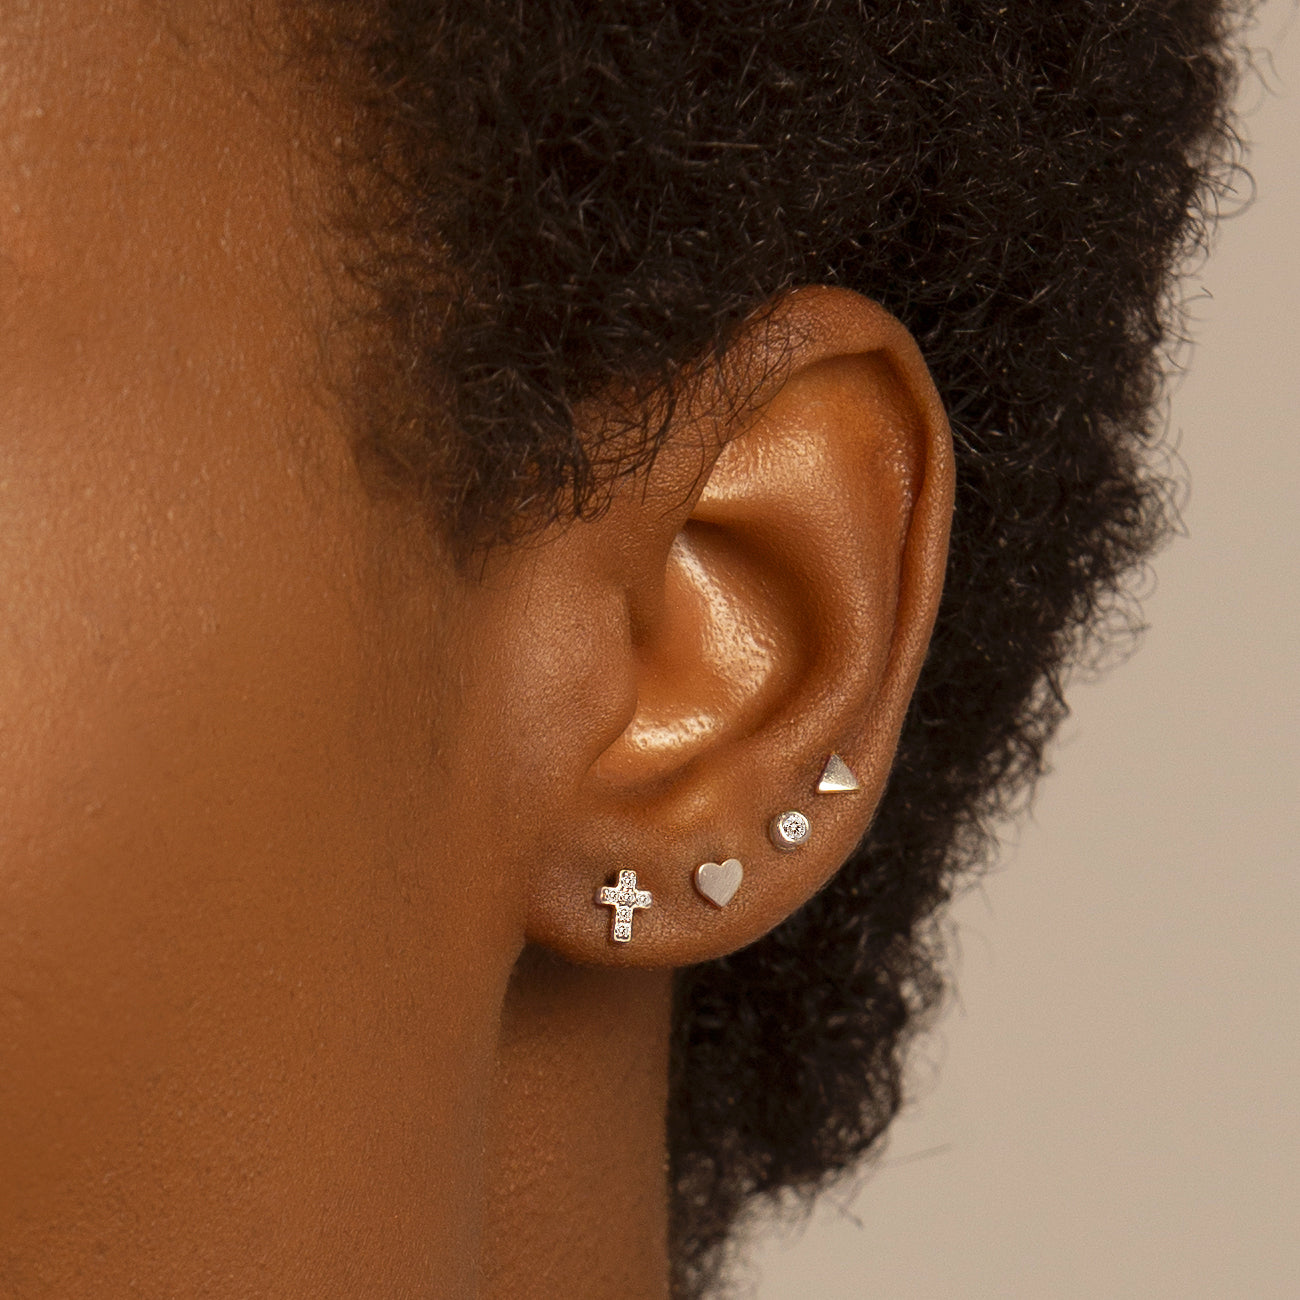 Jade Trau Small Sophisticate Piercing Stud Earrings 1.8, 18K White Gold